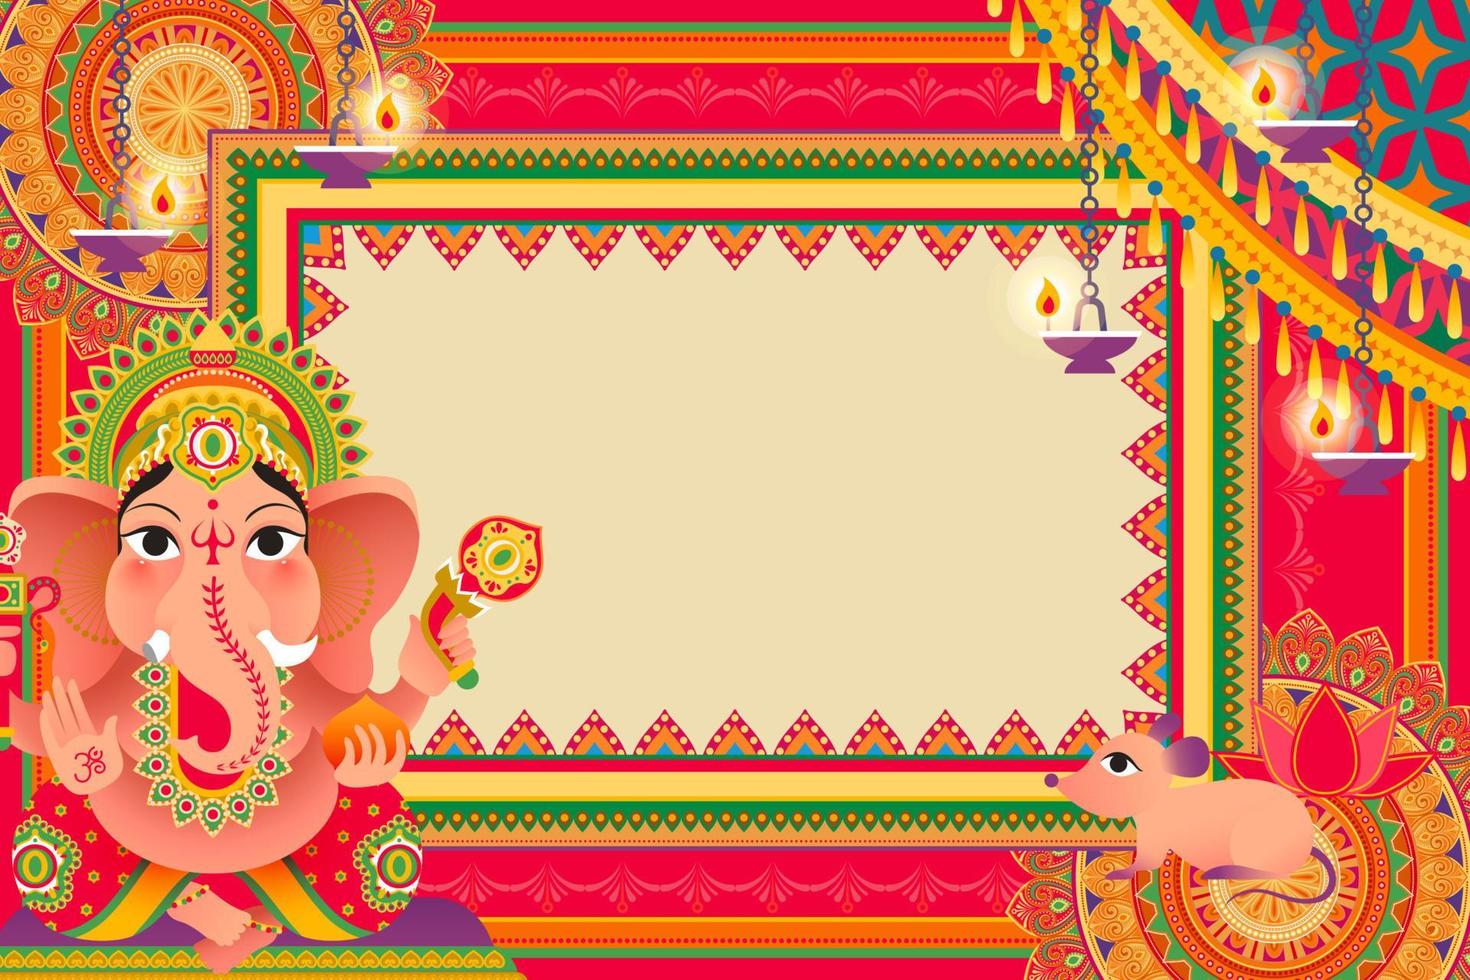 prachtig ganesh chaturthi festival achtergrond ontwerp met Hindoe god ganesha vector